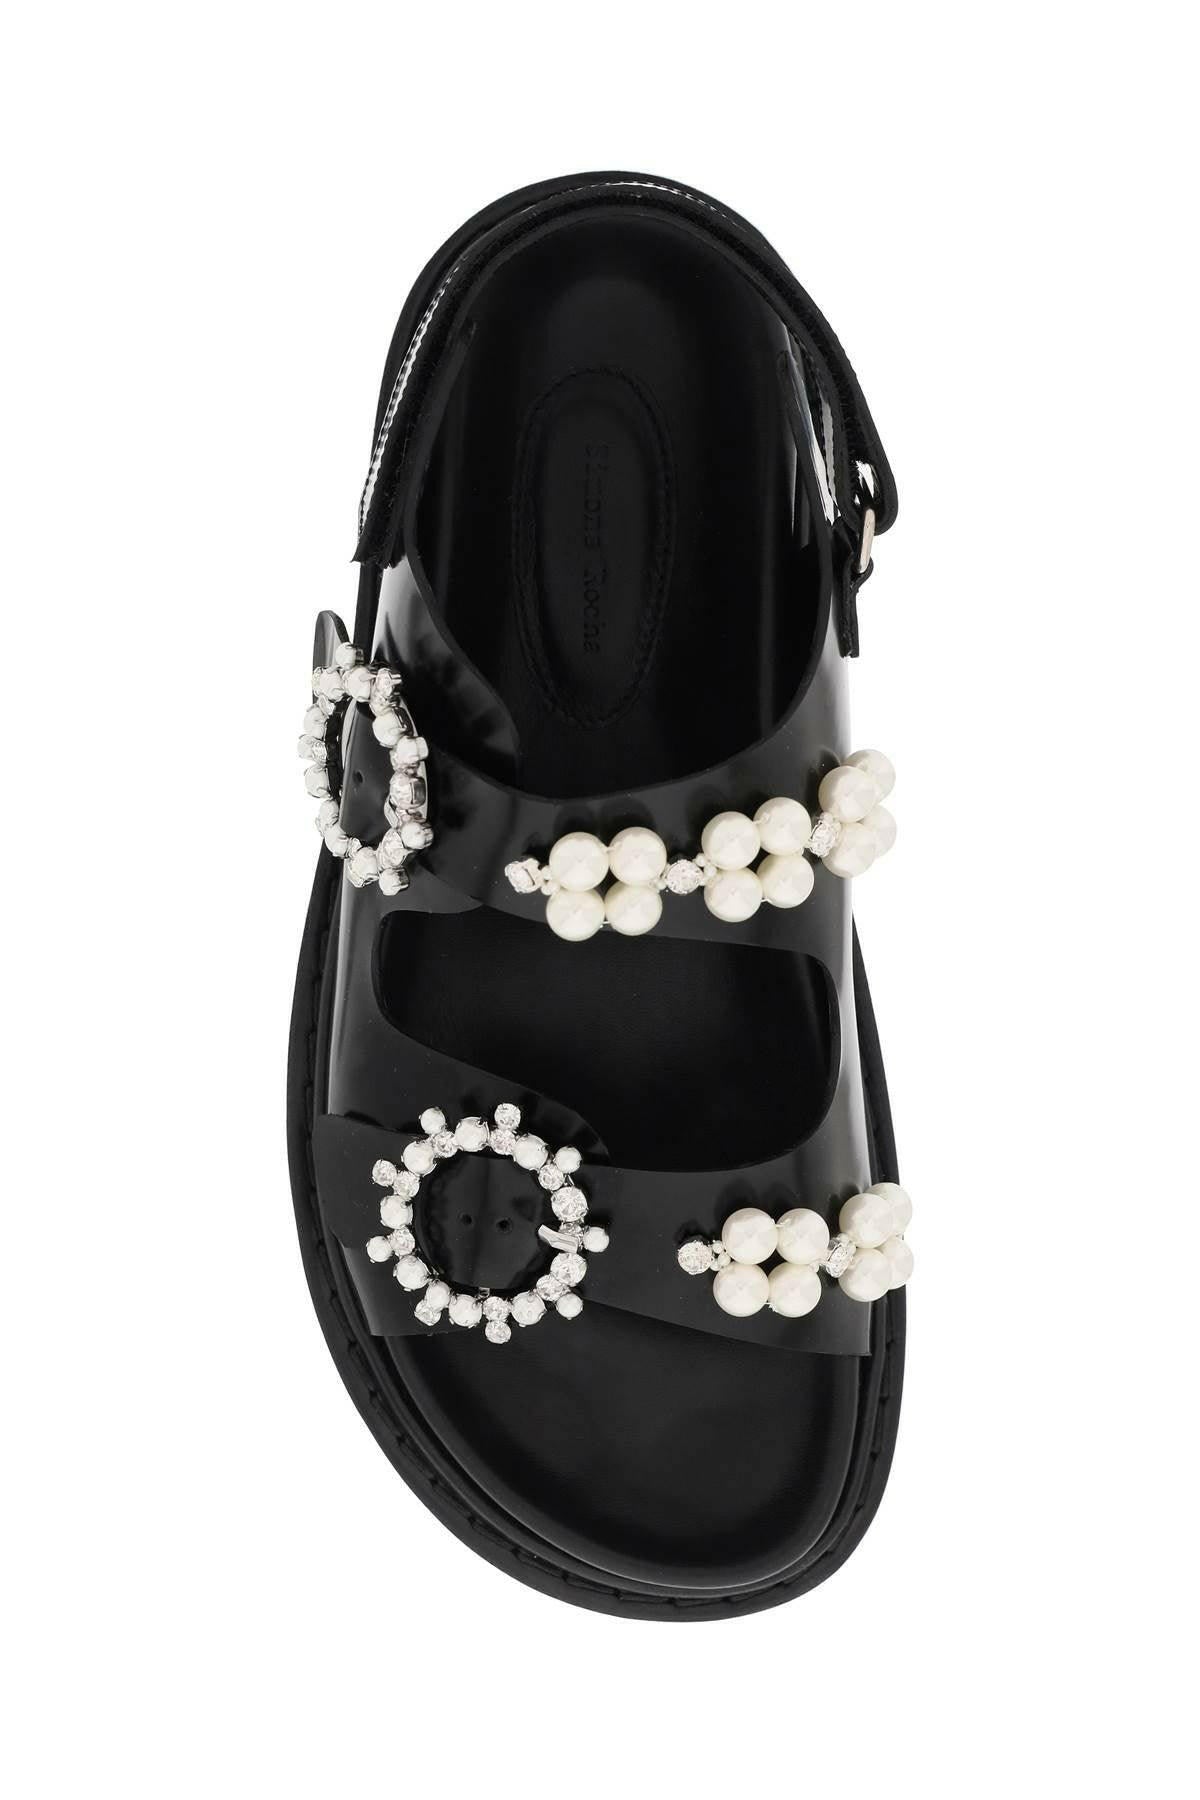 Simone Rocha Pearl and Crystal Embellished Platform Sandals - JOHN JULIA